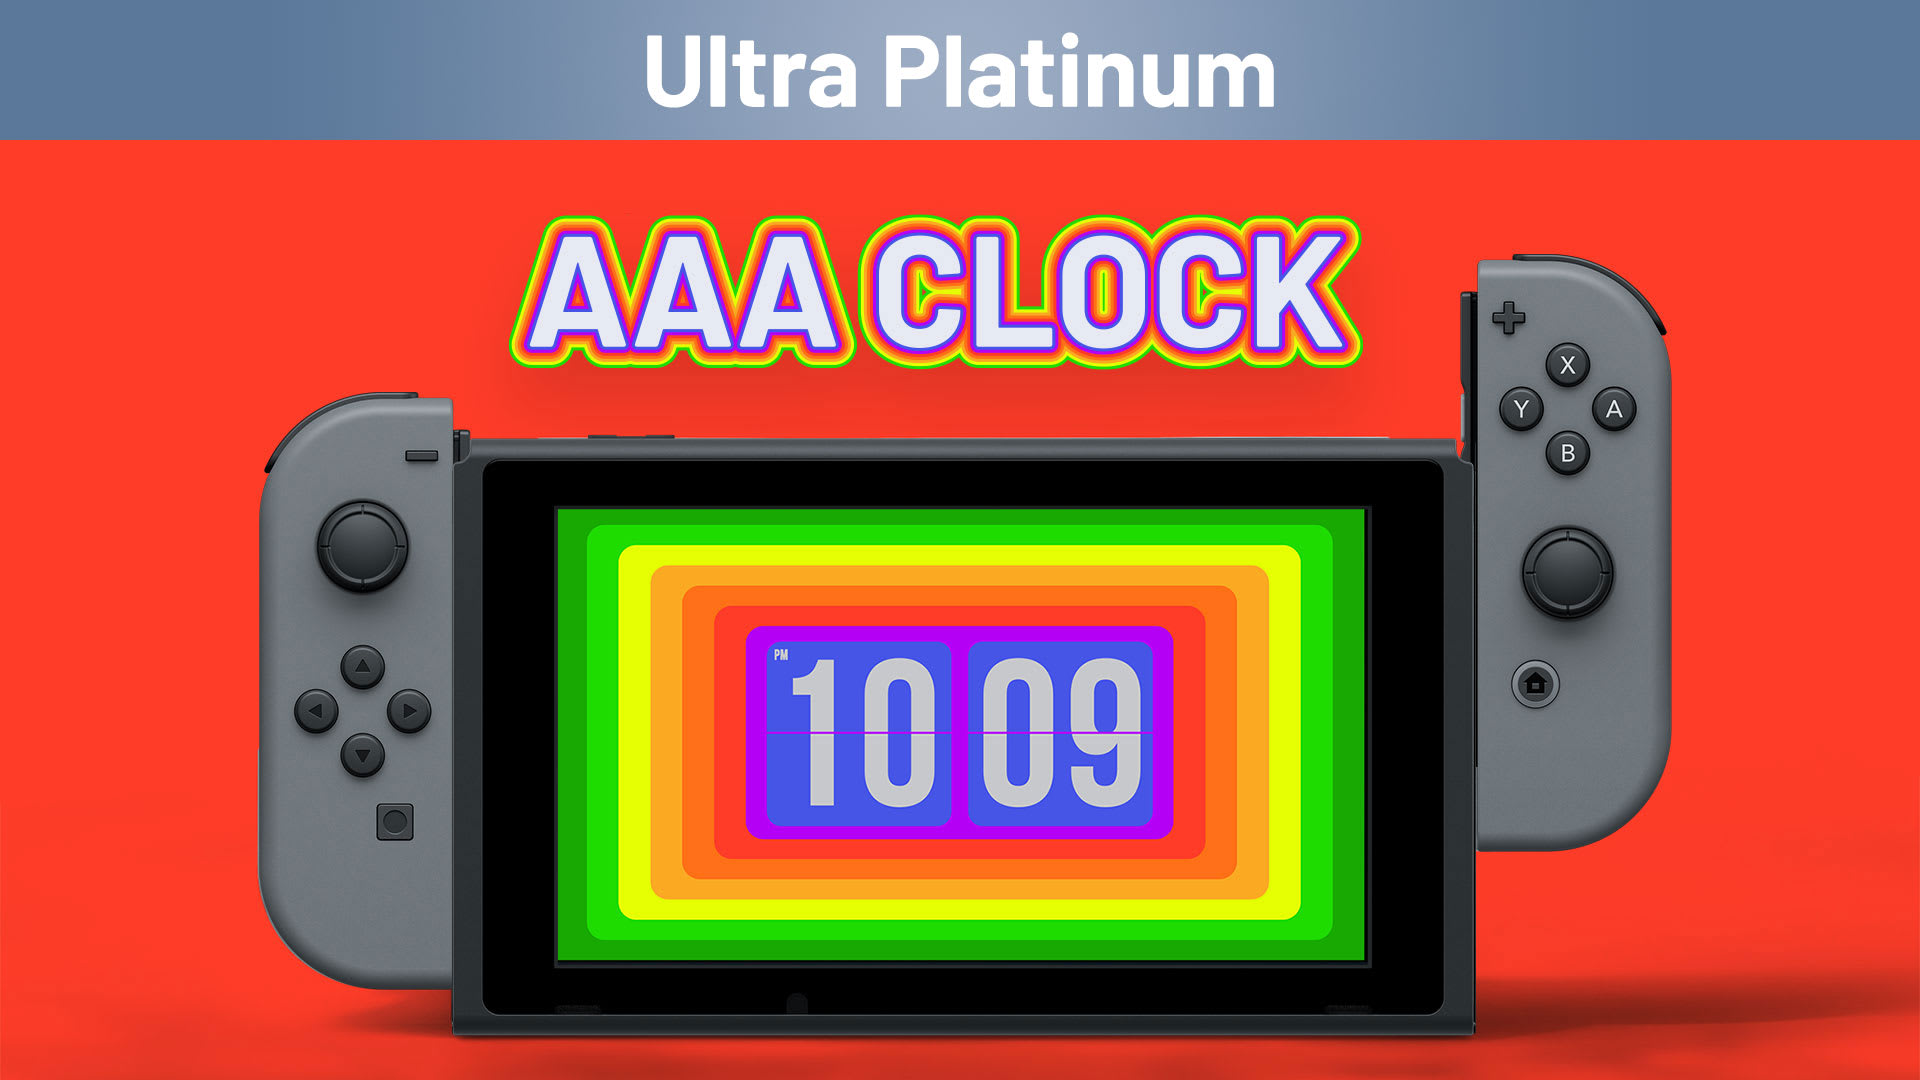 AAA Clock Ultra Platinum